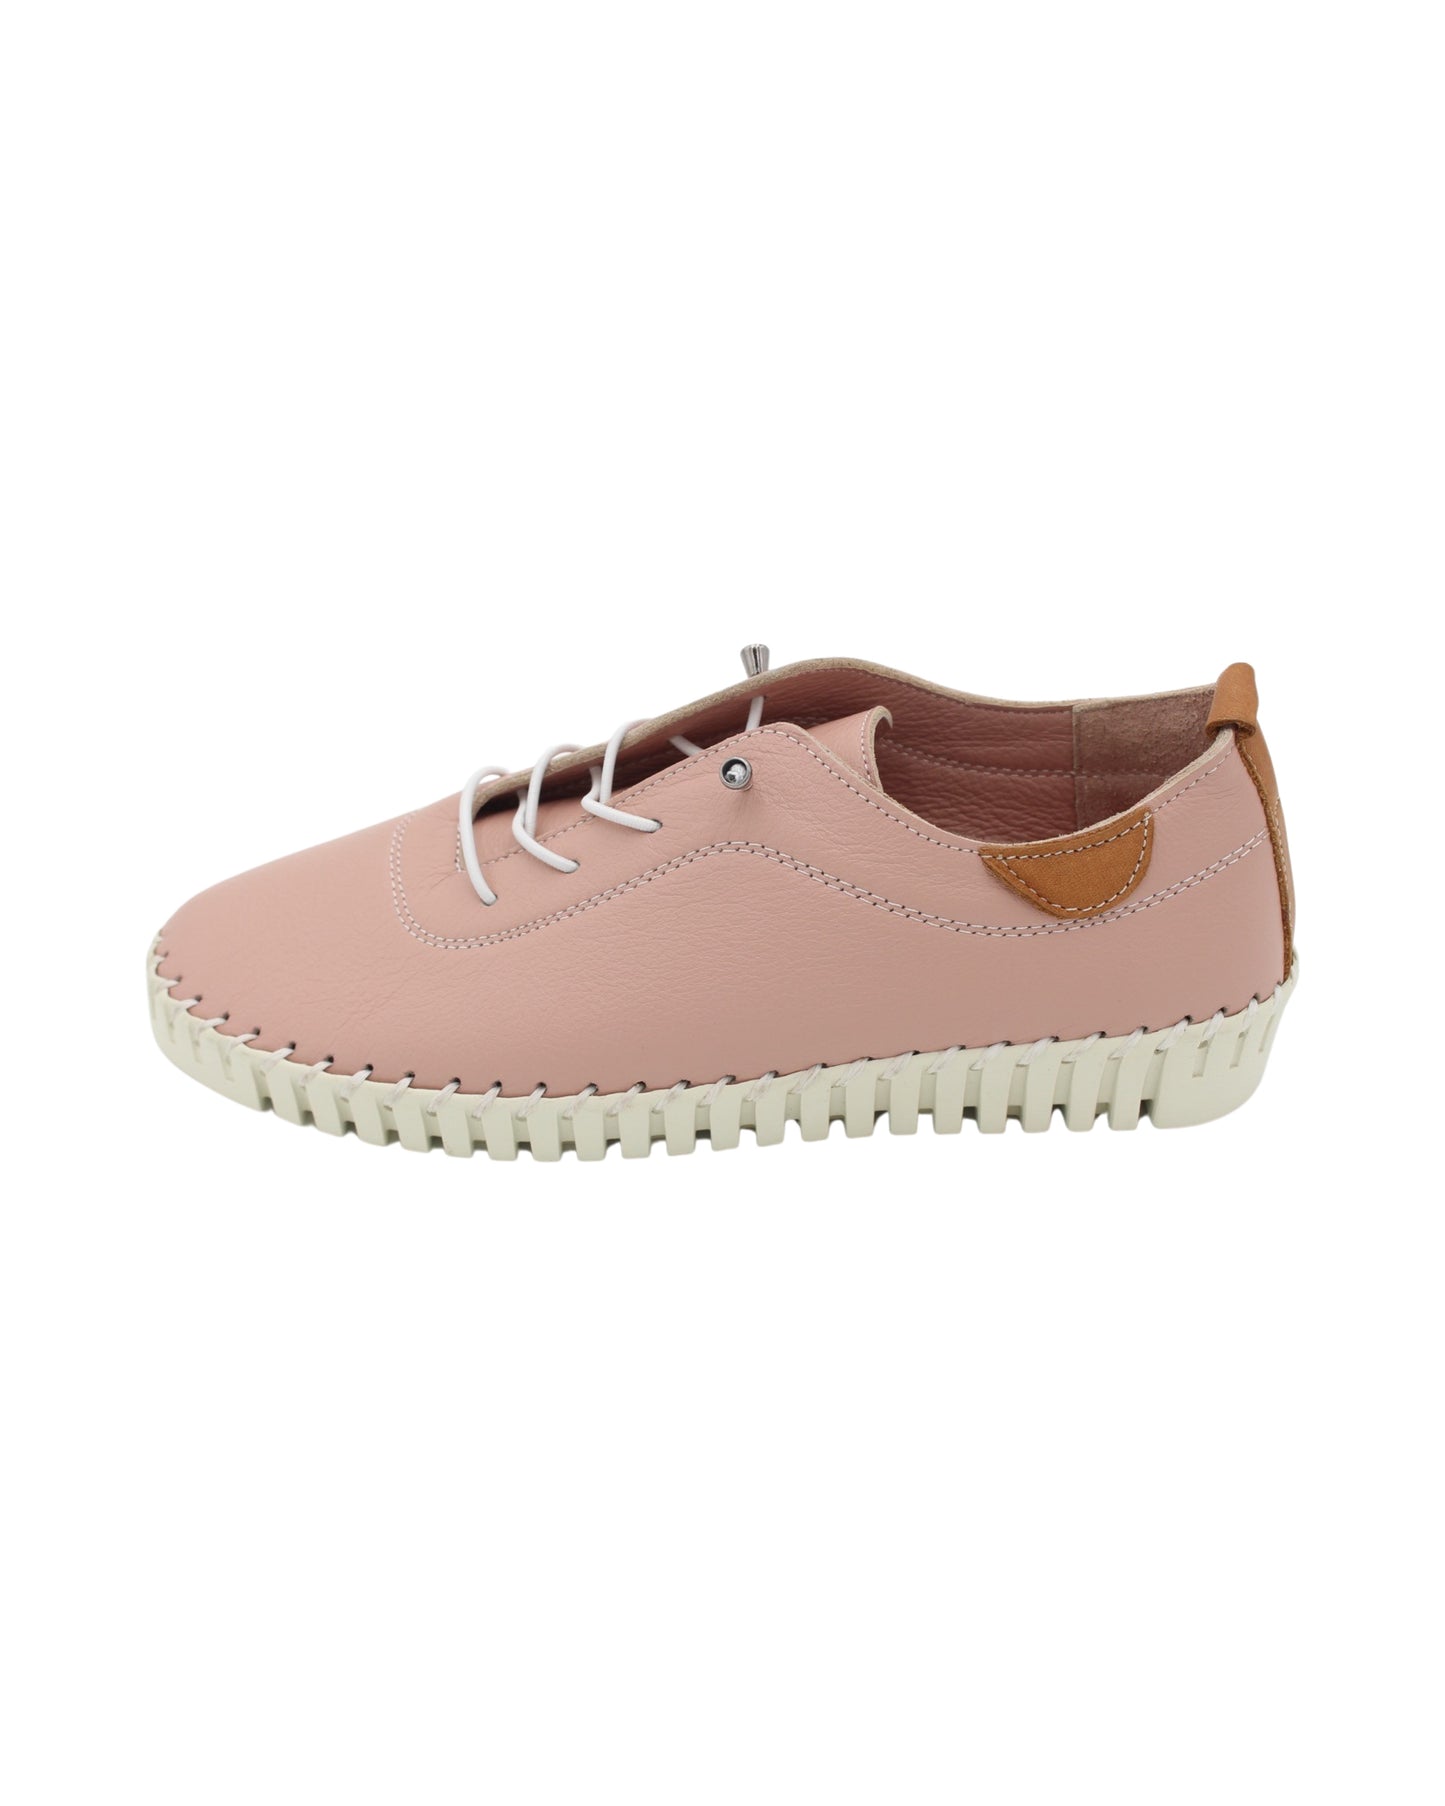 Lunar - Ladies Shoes Trainers Pale Pink (2052)